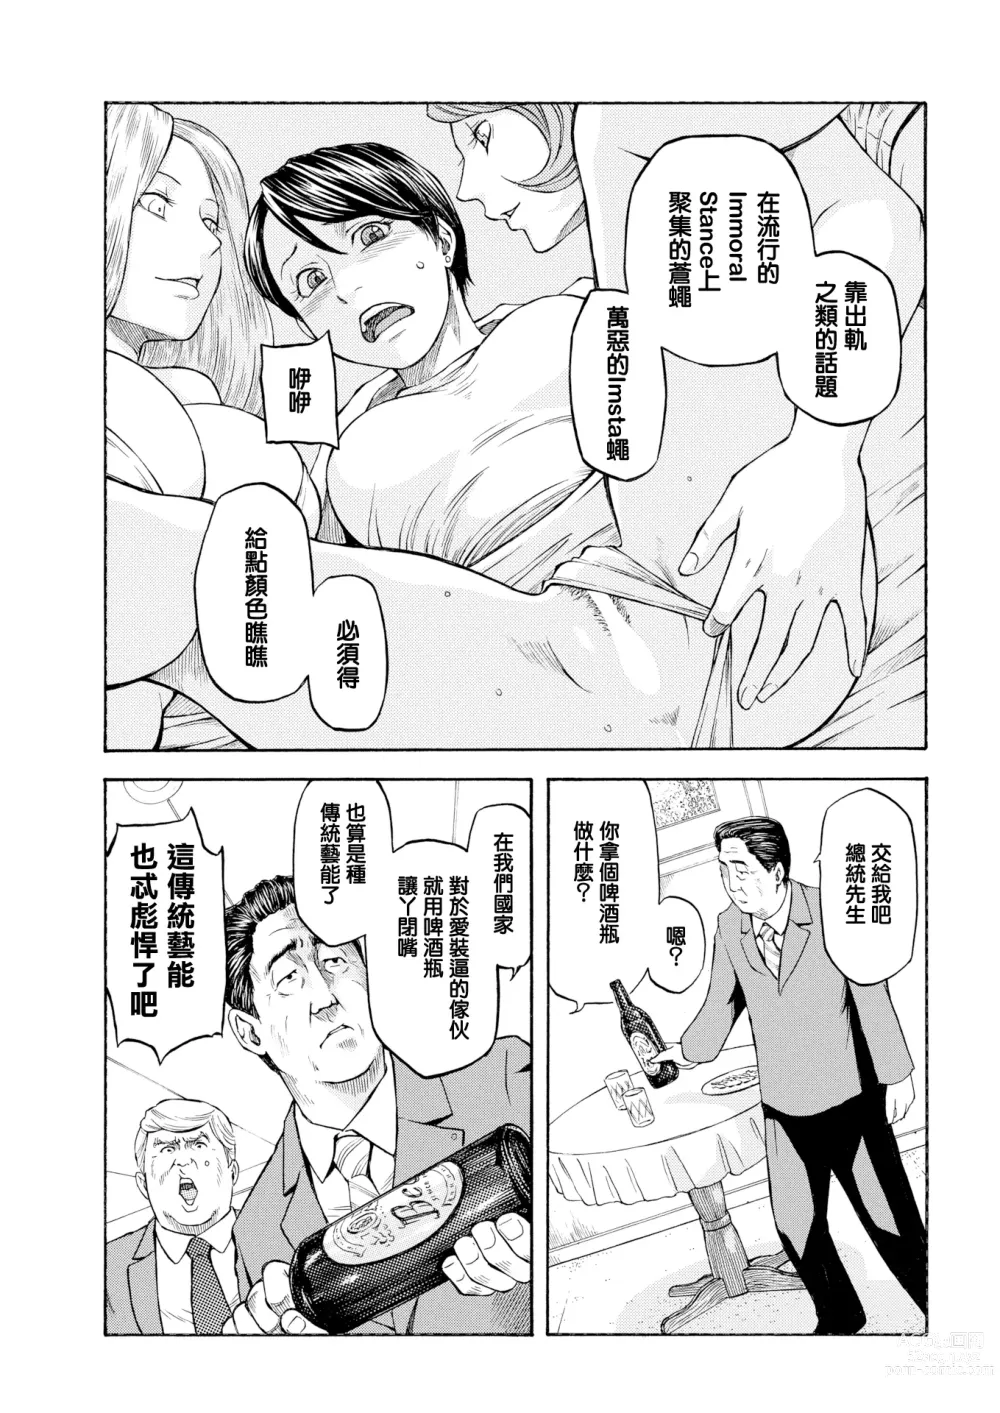 Page 6 of manga Abare Sannanbou Shougun